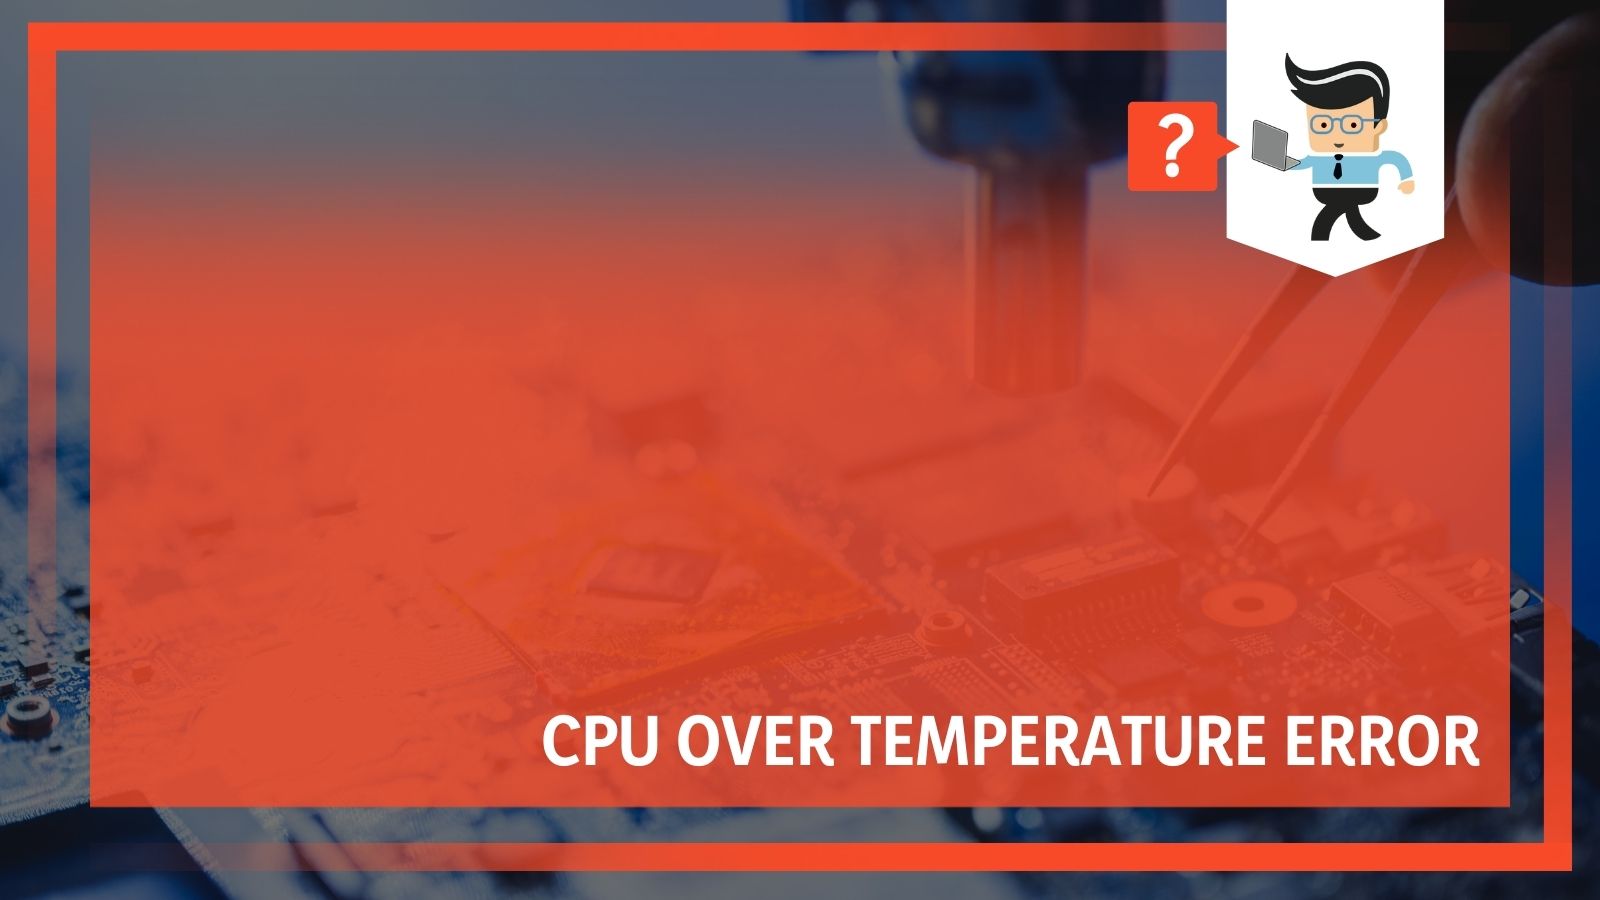 Motherboard] Troubleshooting-An error “CPU Over Temperature Error